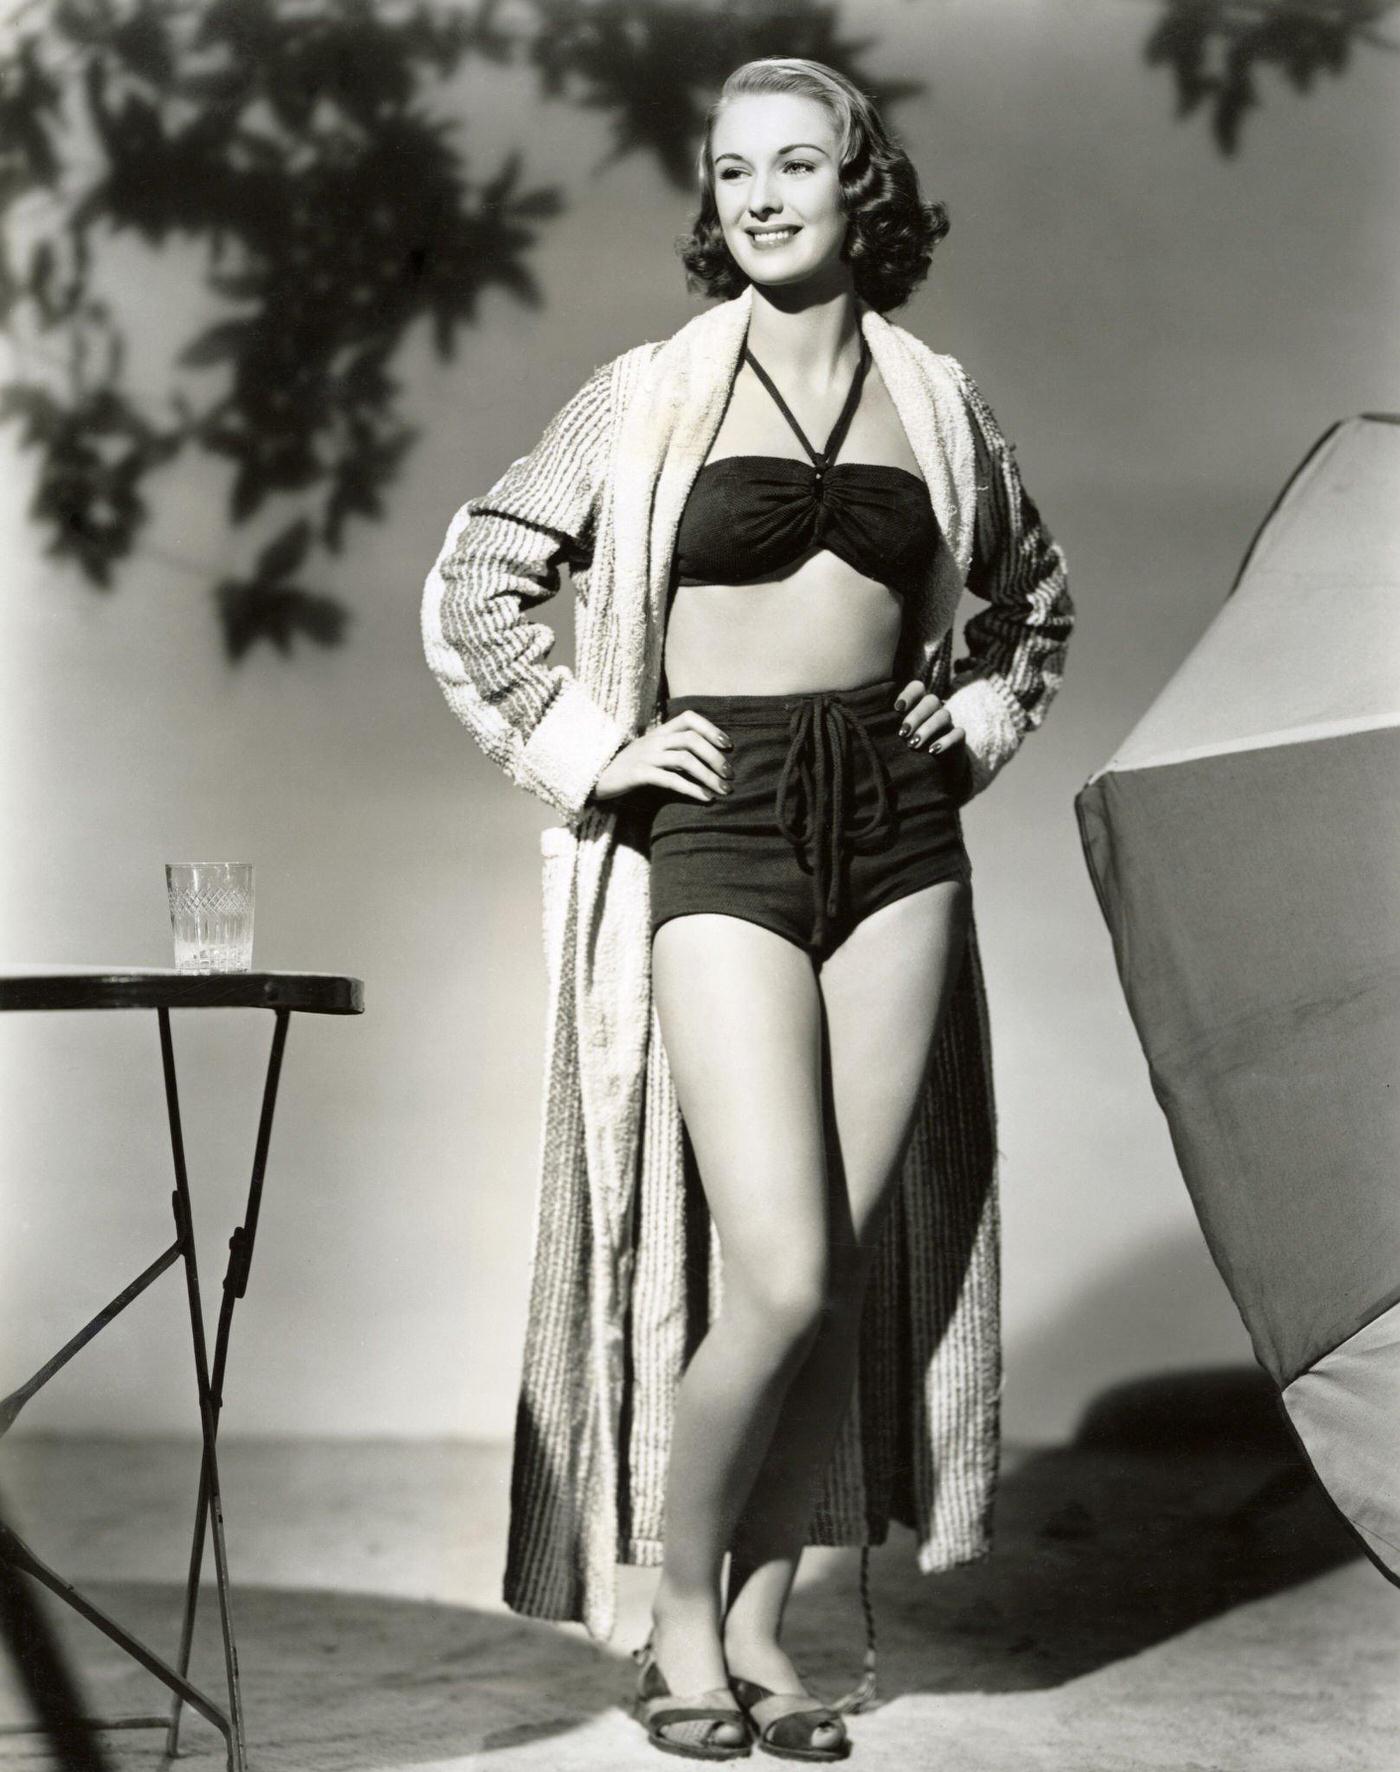 Susan Shaw, English film actress, in a studio portrait, 1947.